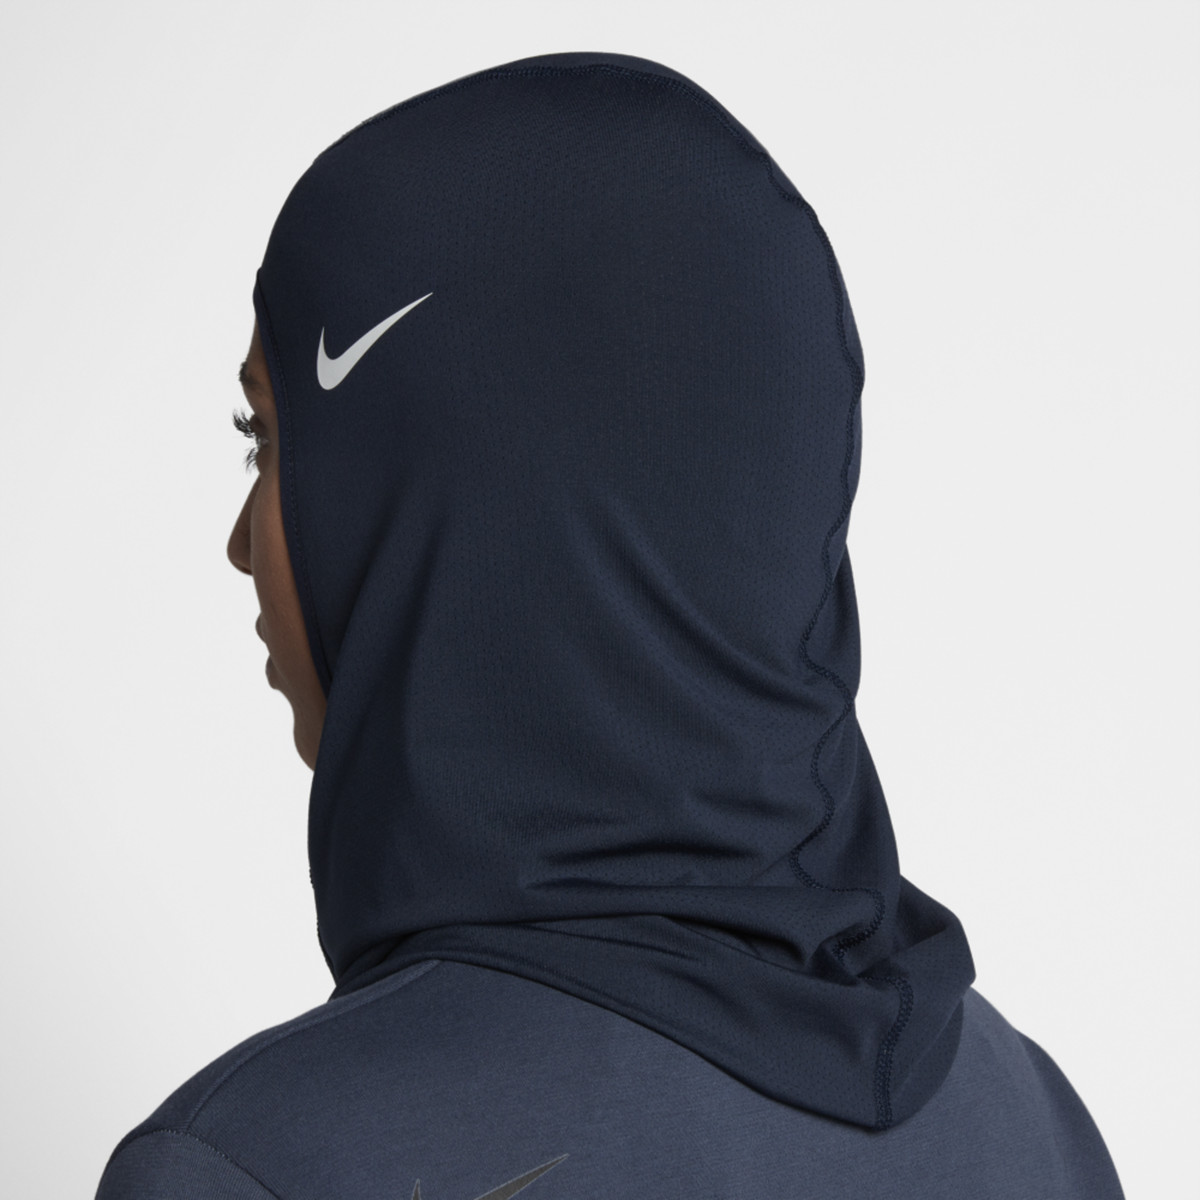 An athlete wearing the Nike Pro Hijab